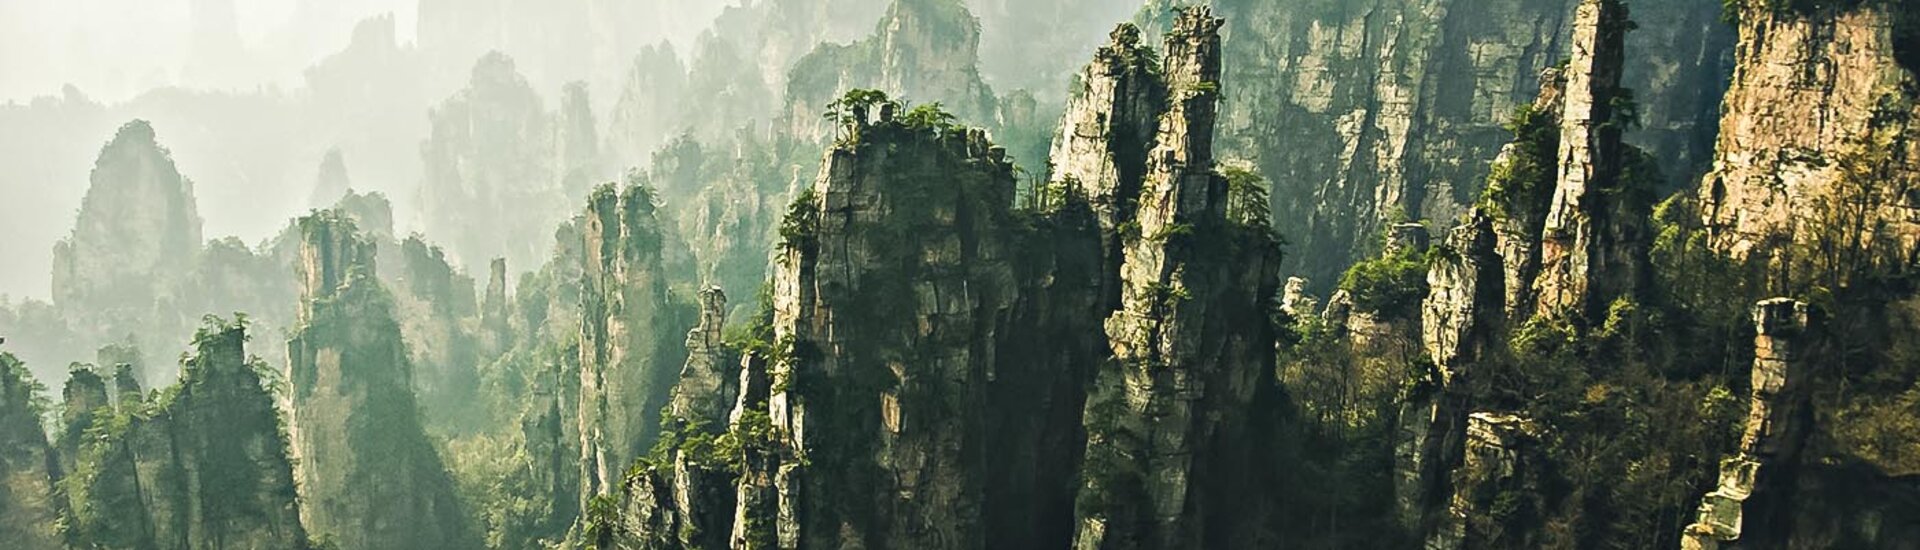 Felsenlandschaft des Zhangjiajie Nationalparks in China